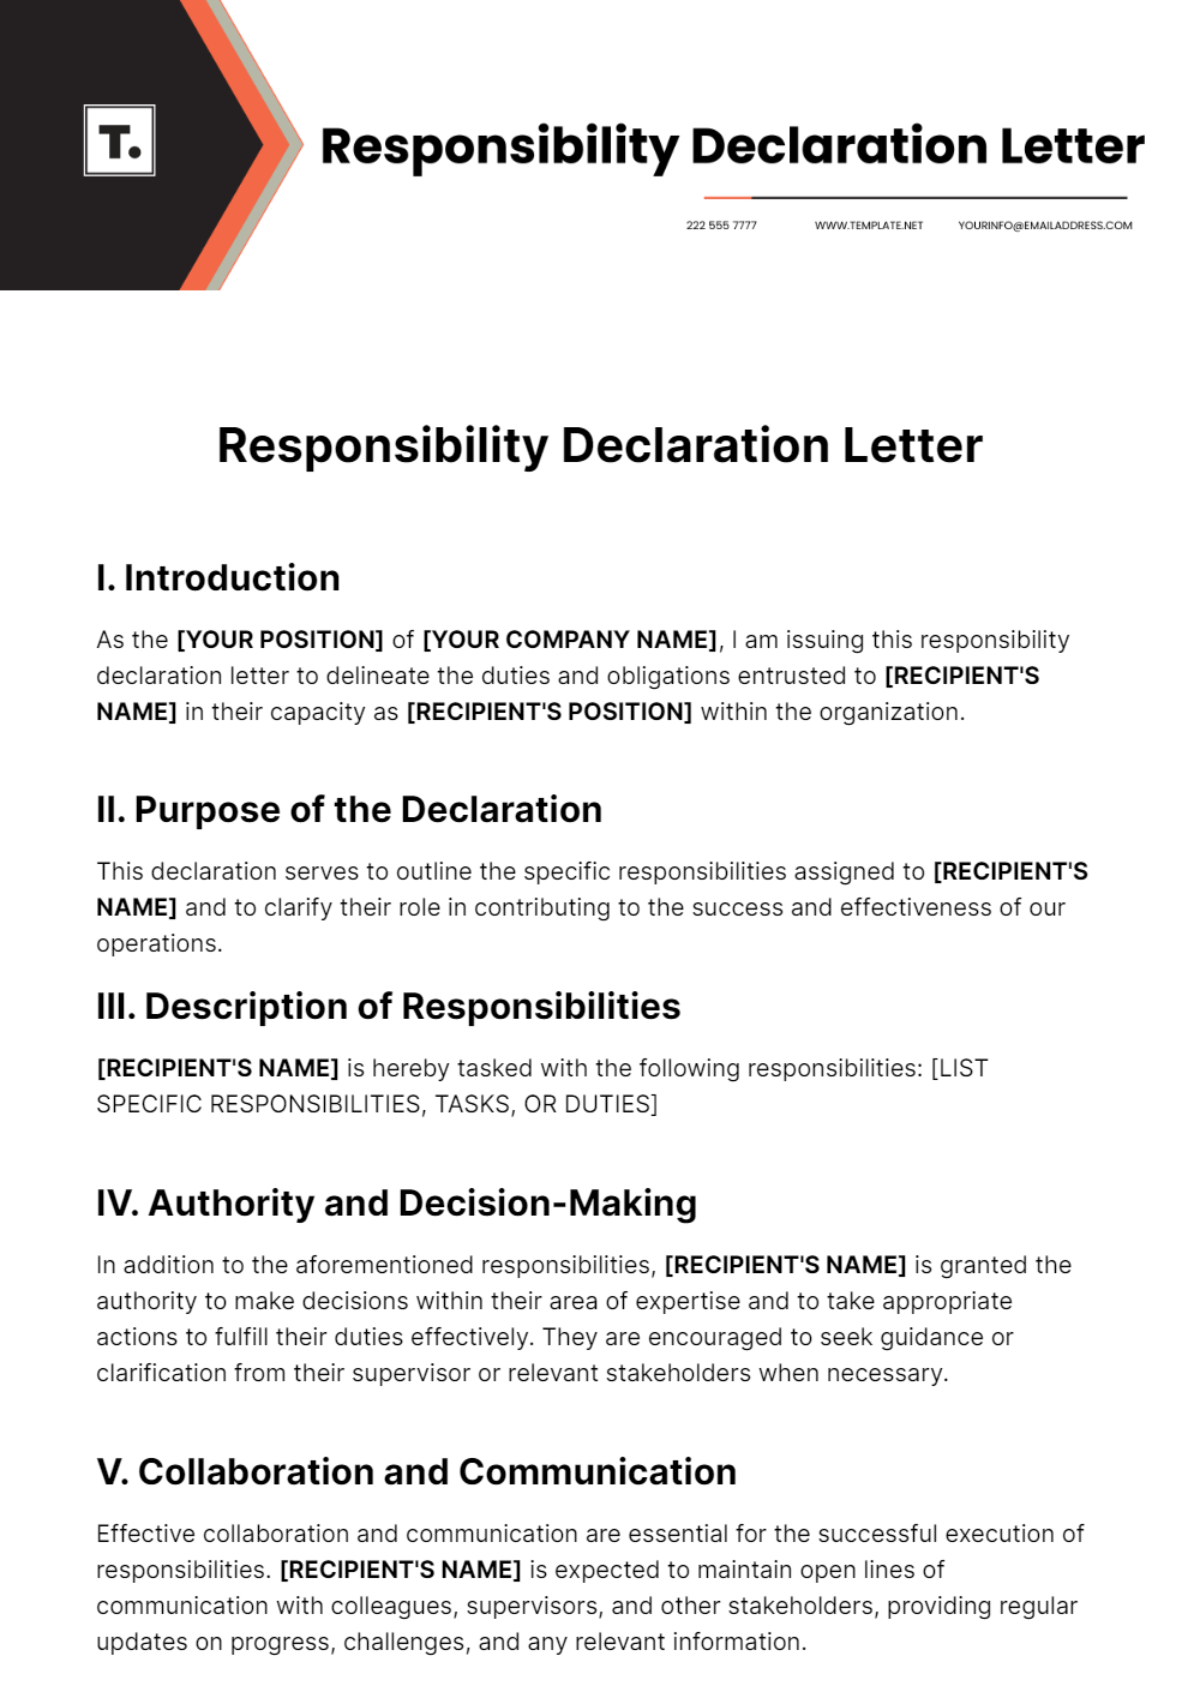 Responsibility Declaration Letter Template